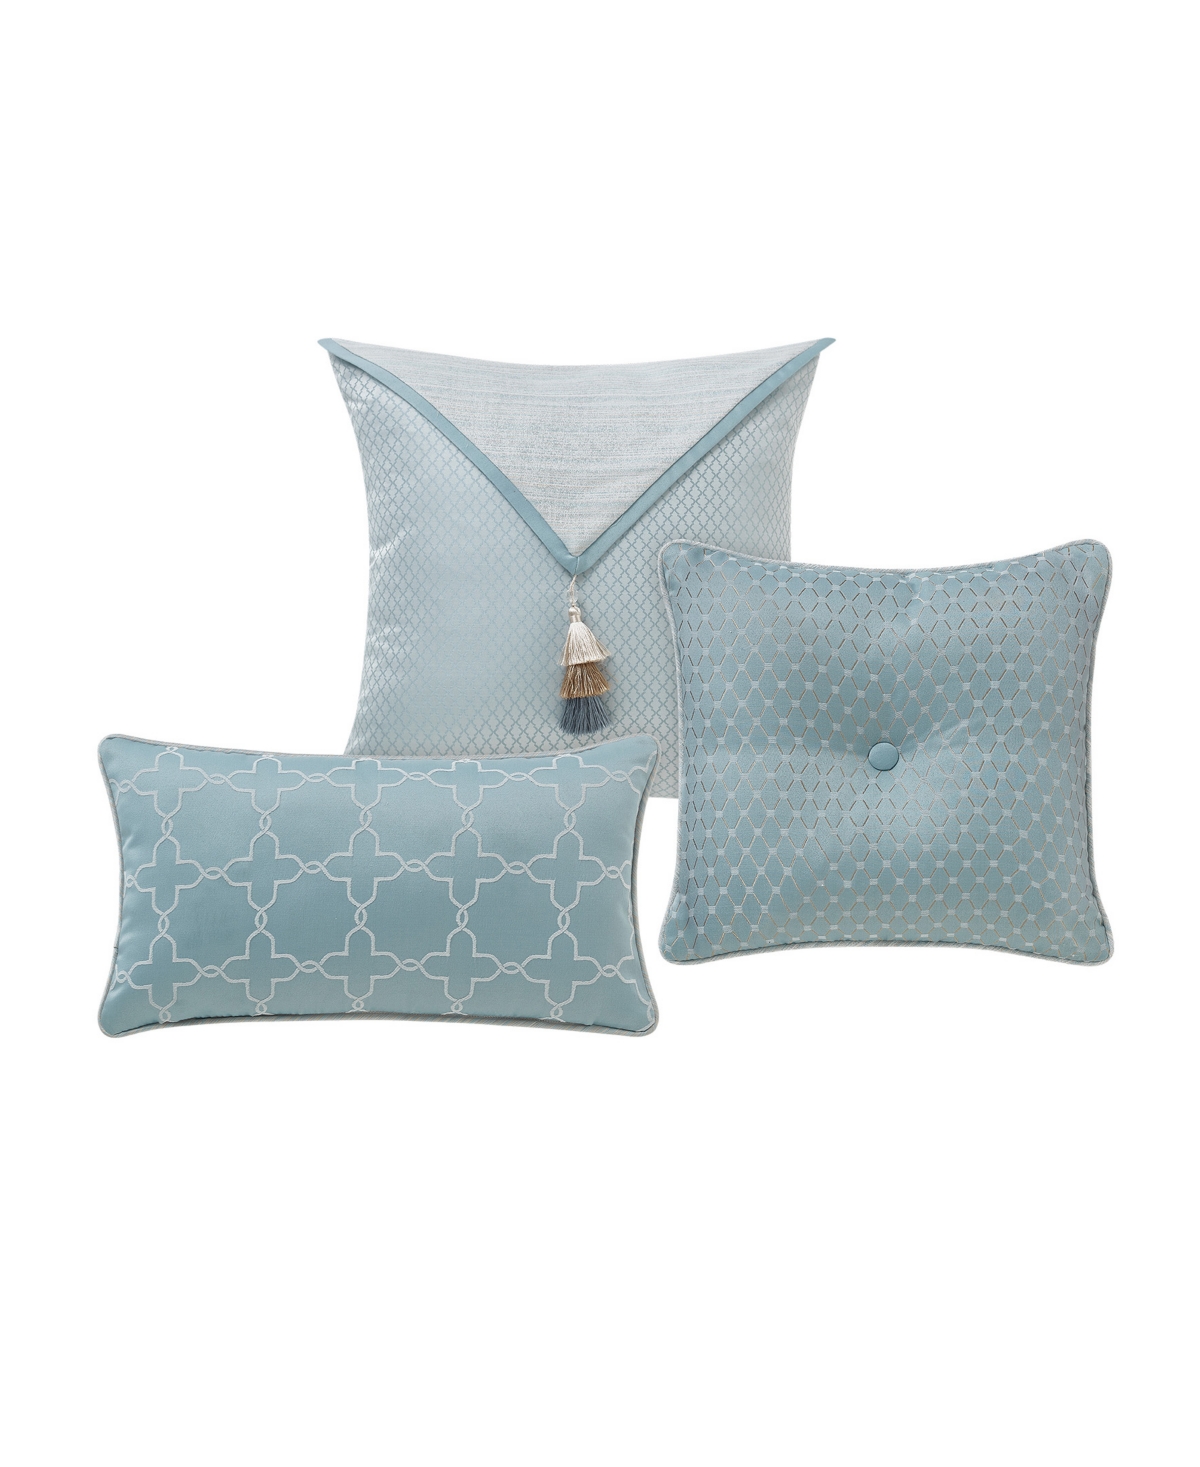 Waterford Arezzo Textured Reversible 3 Piece Decorative Pillow Set Bedding